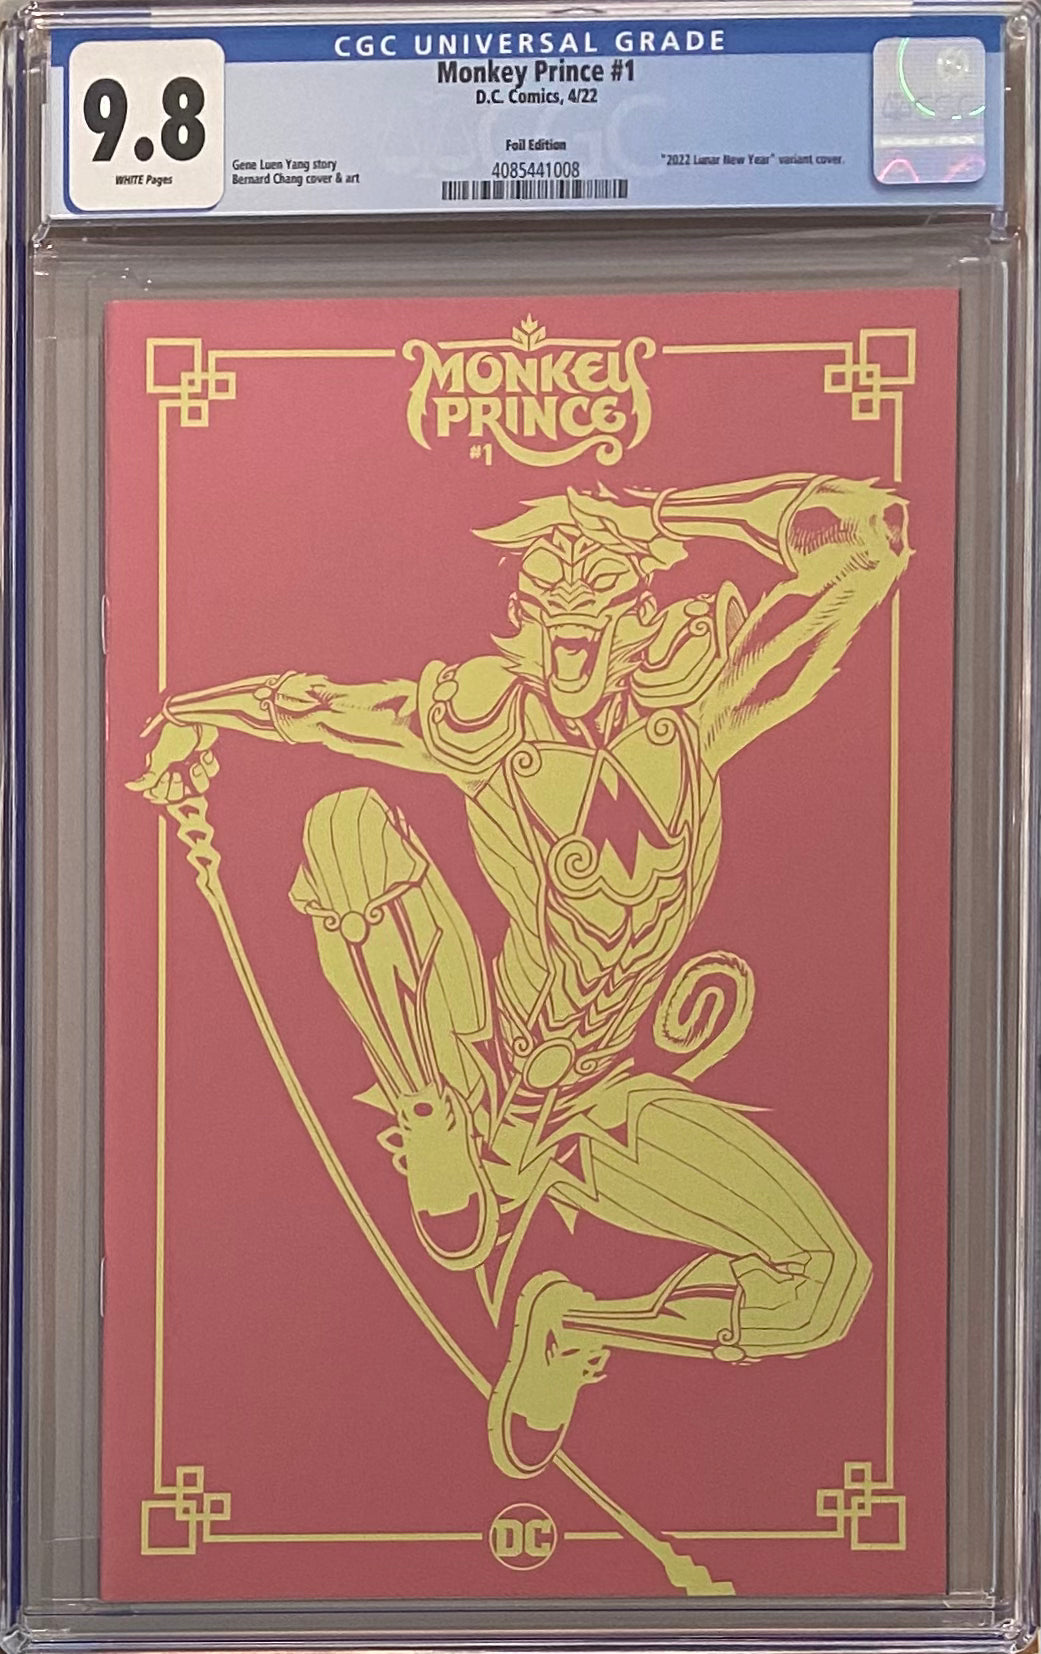 Monkey Prince #1 Gold Foil Red Envelope Variant CGC 9.8